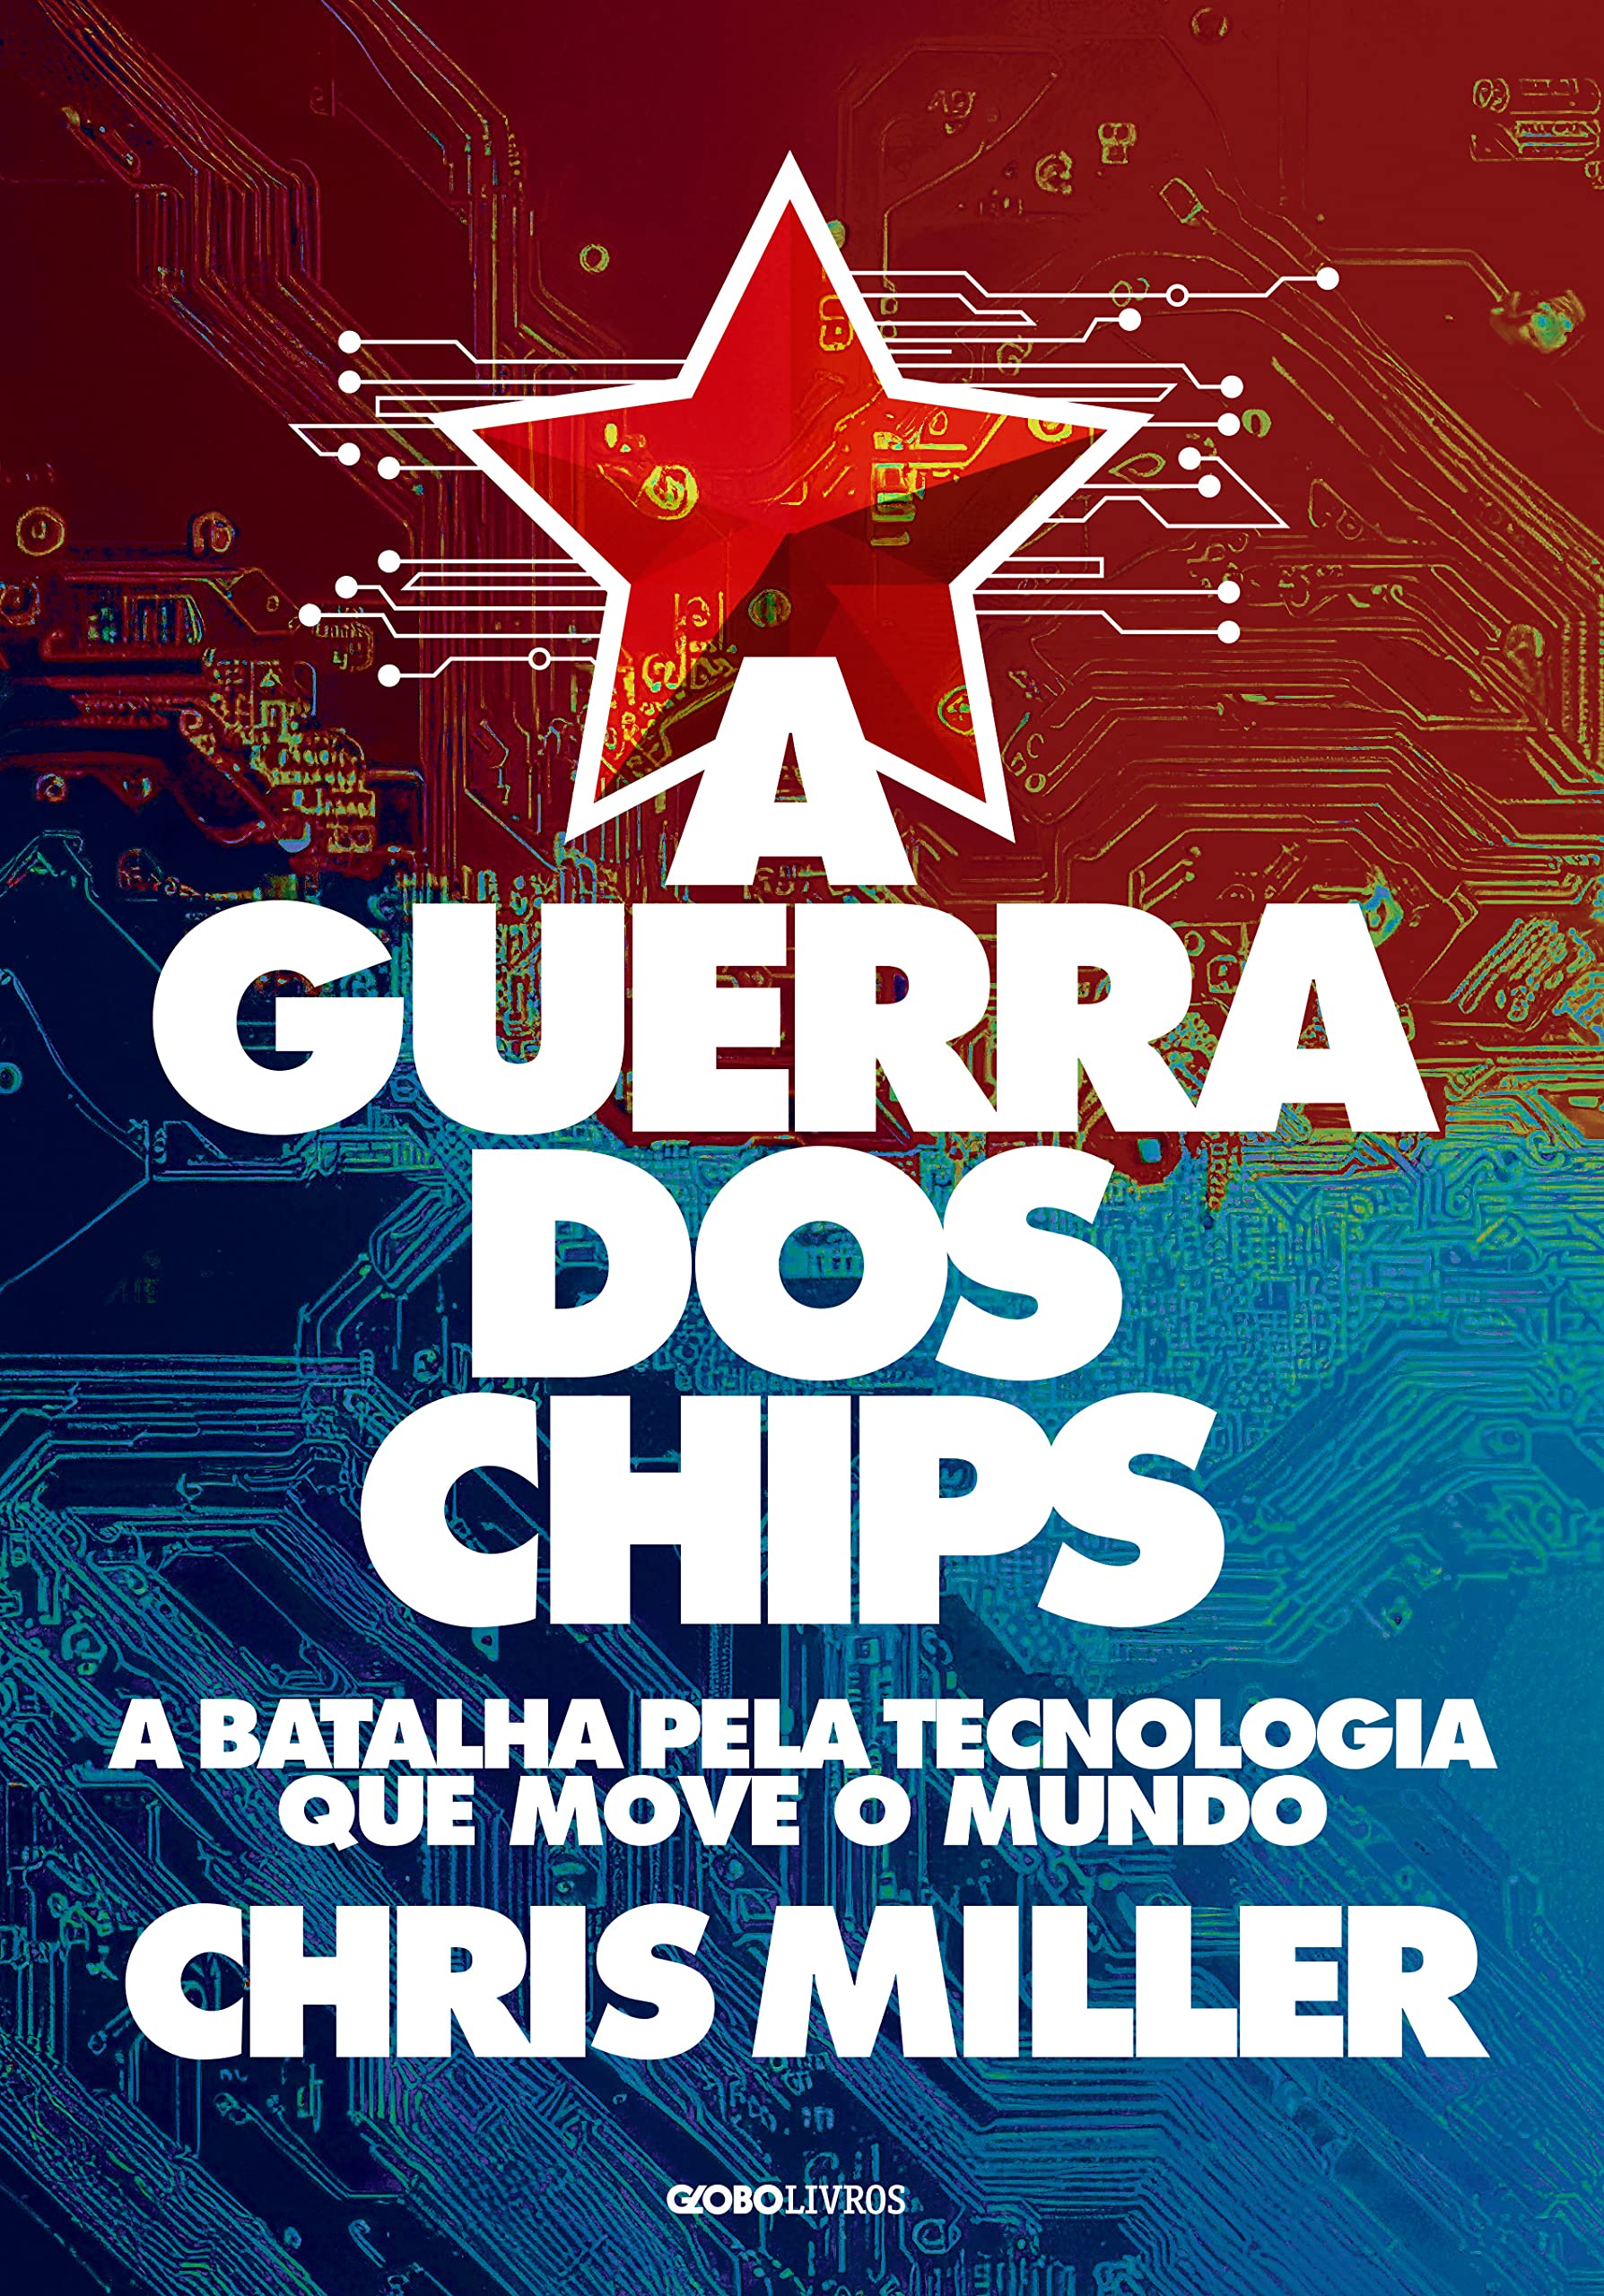 A guerra dos chips: A batalha pela tecnologia que move o mundo (Portuguese Edition)